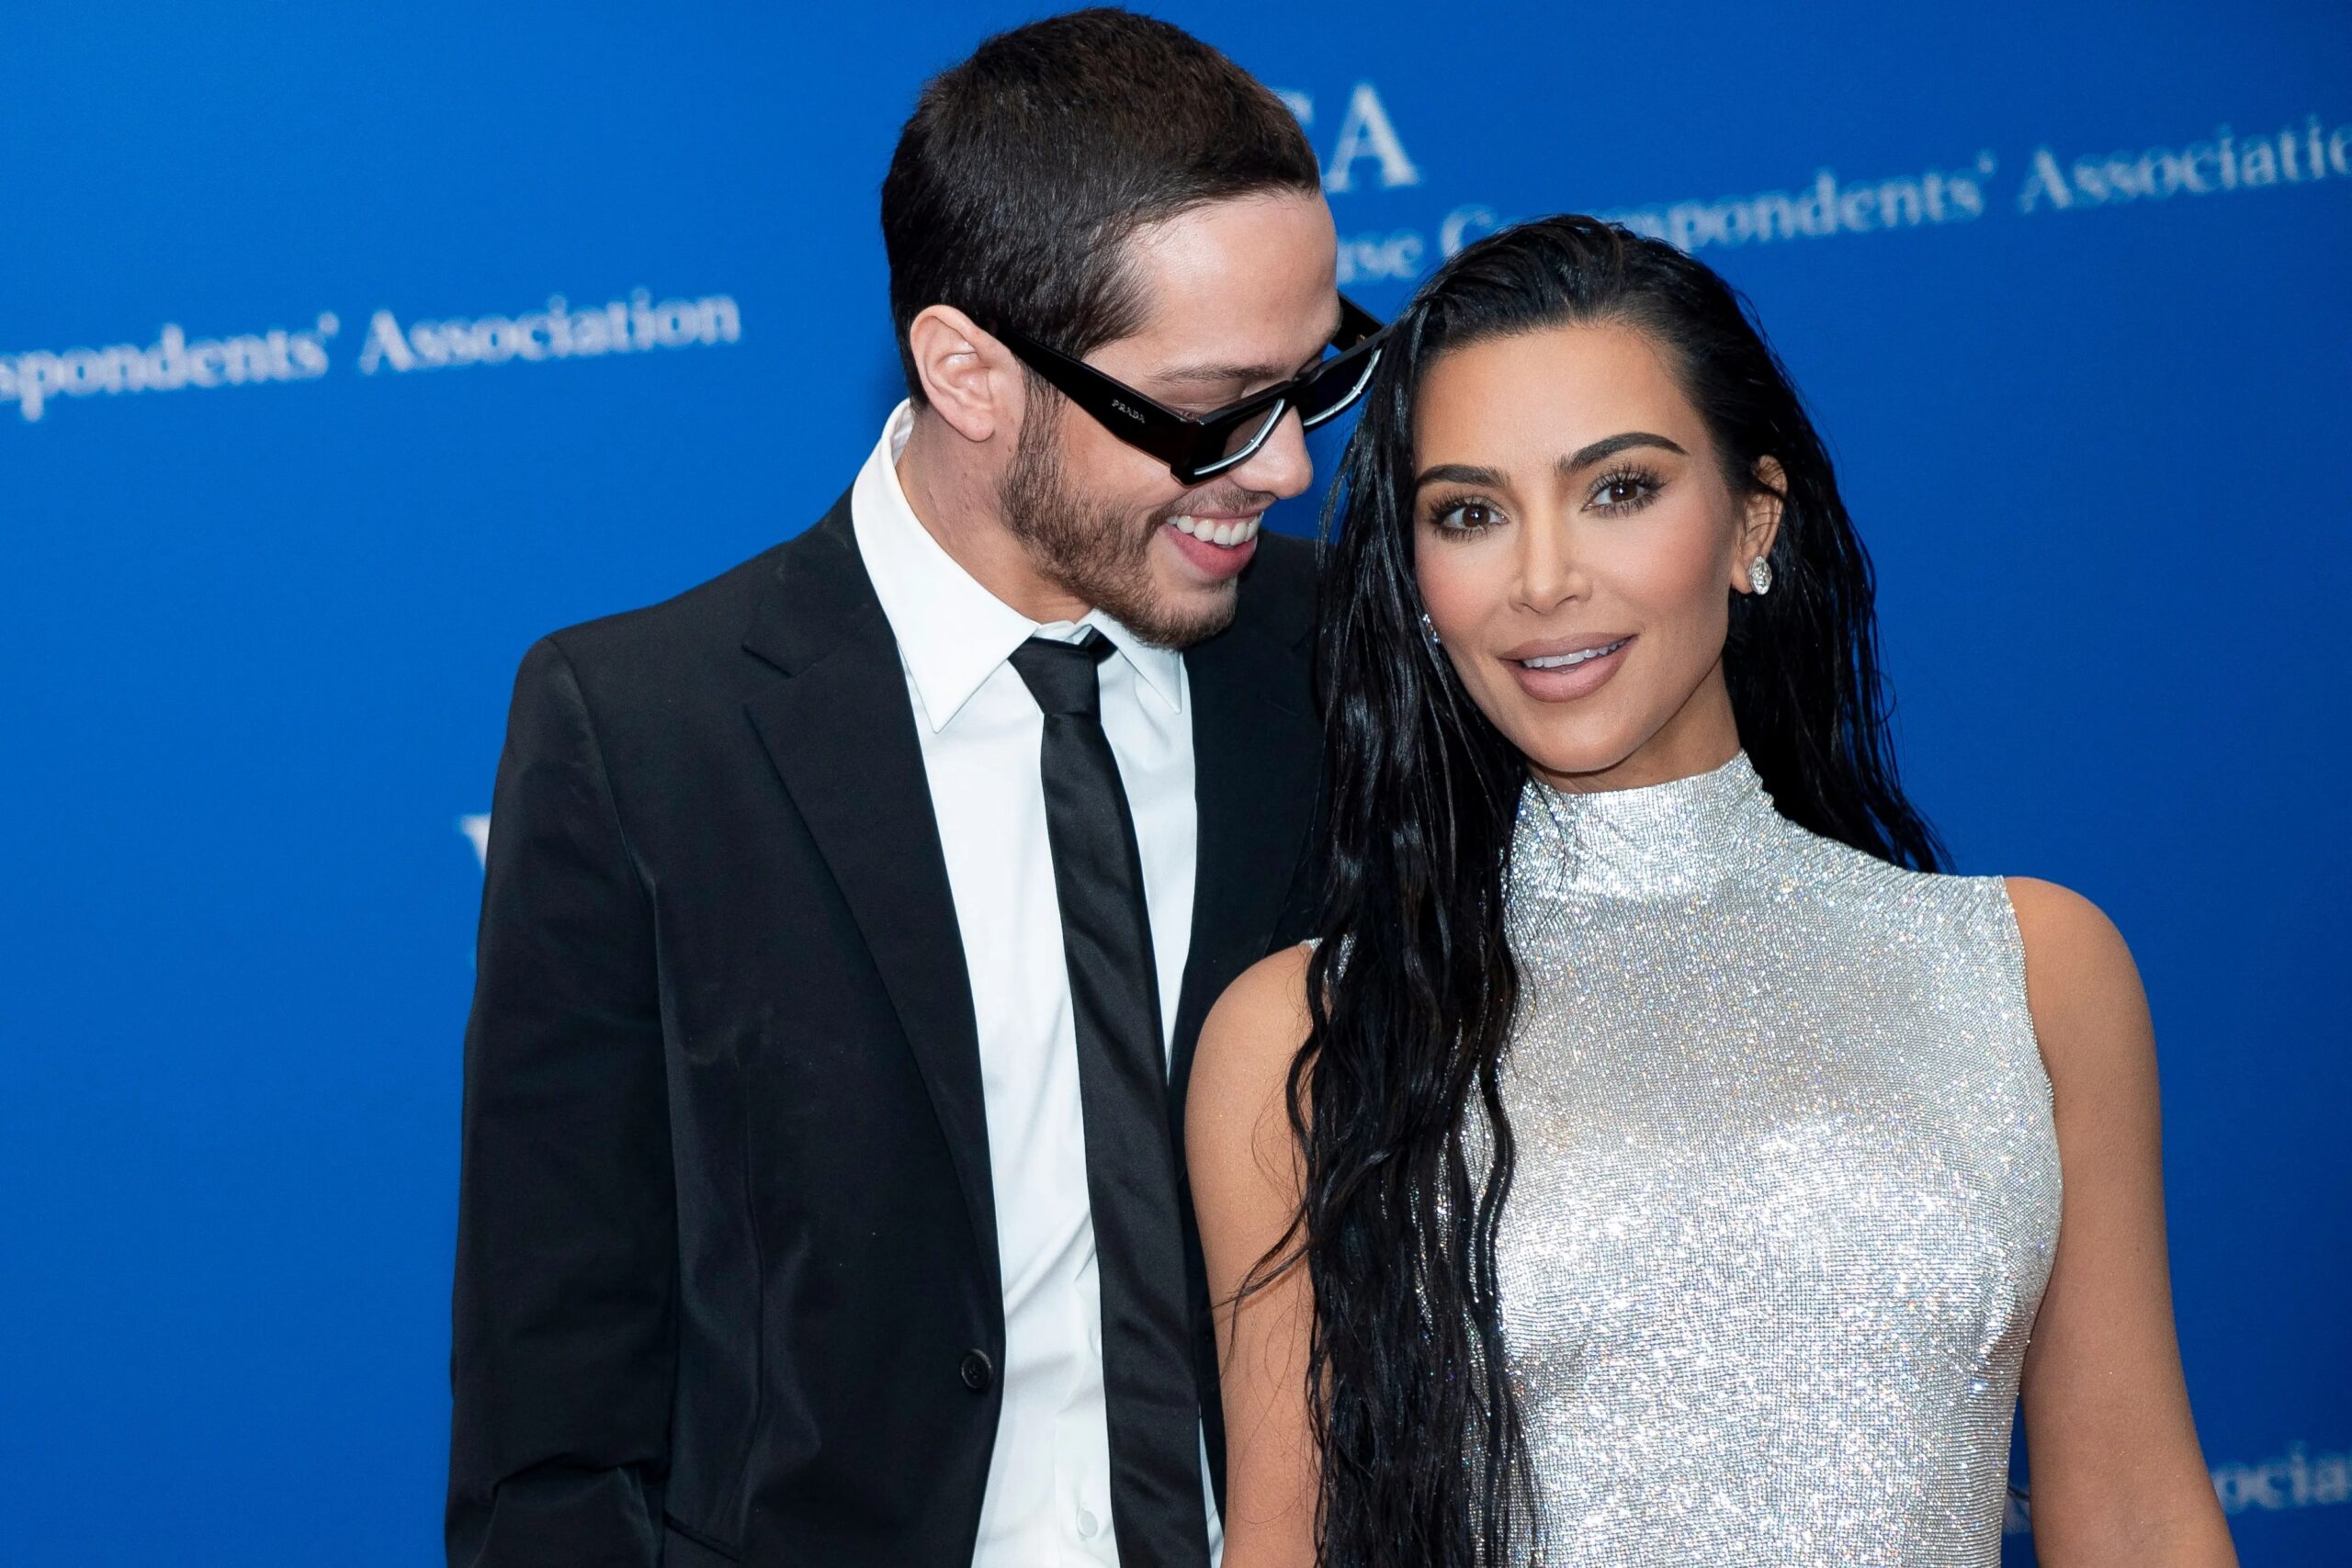 What We Know About Kim Kardashian and Pete Davidson's Breakup